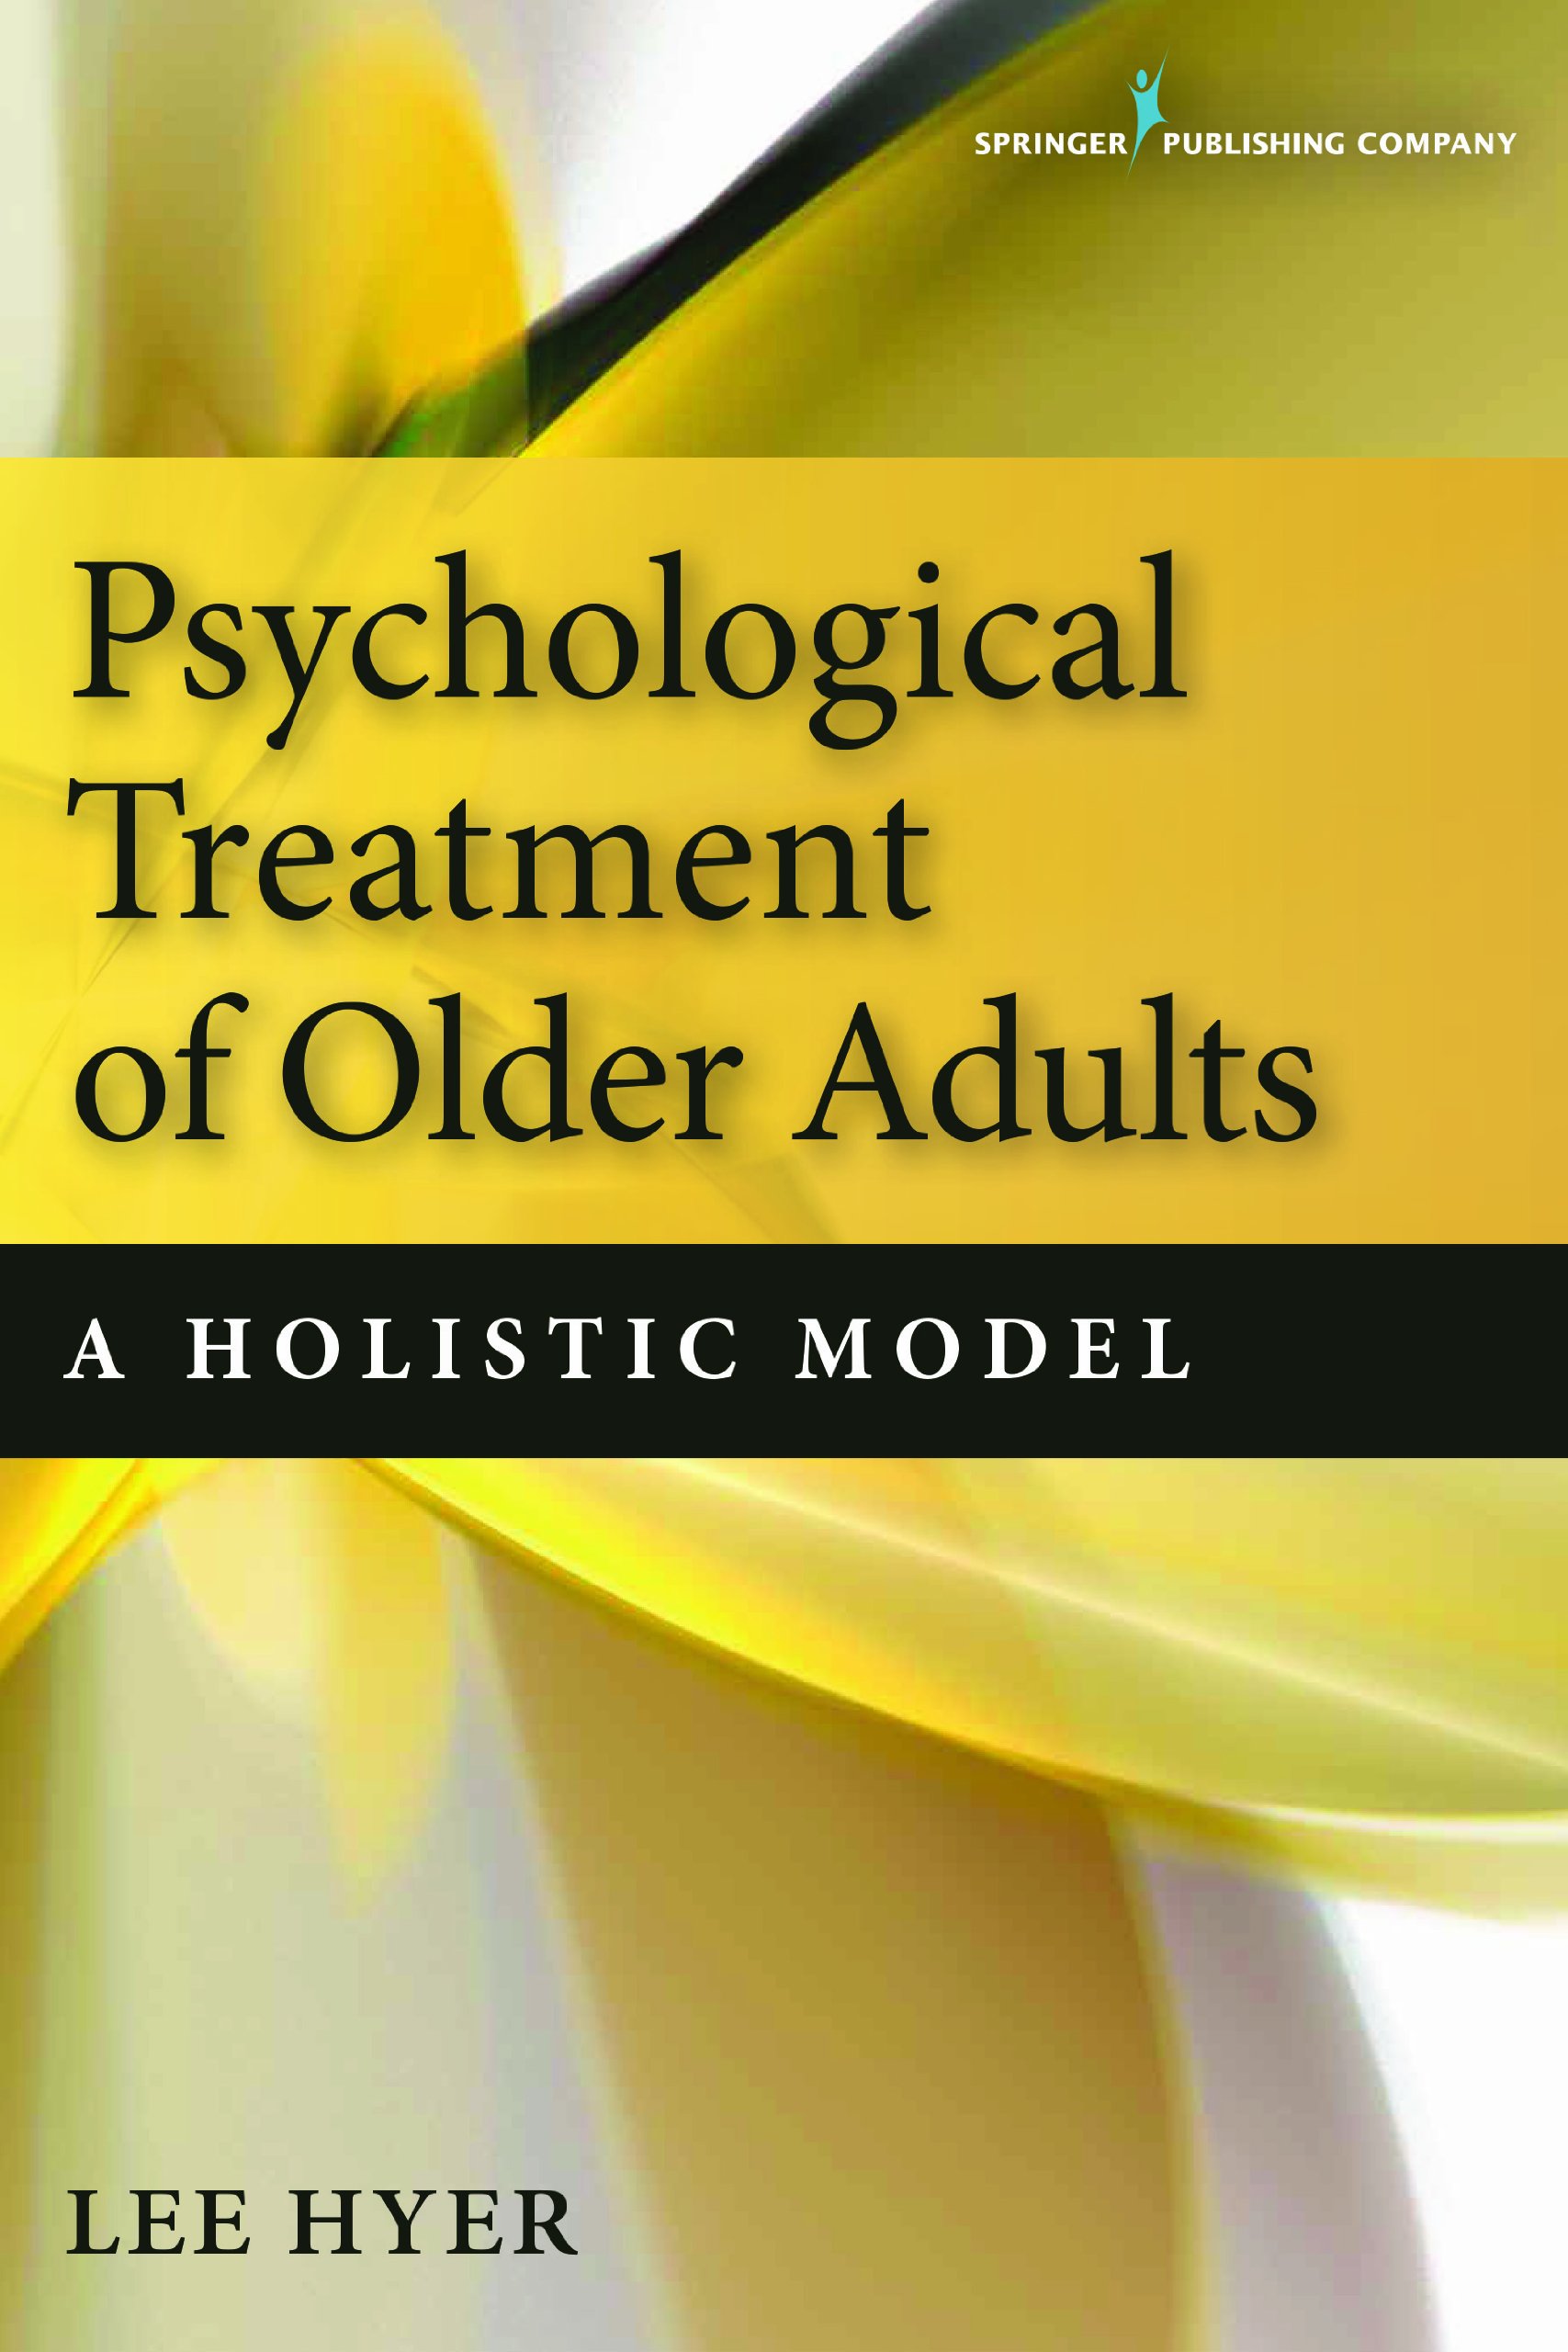 Psychological Treatment of older adults : a holistic model